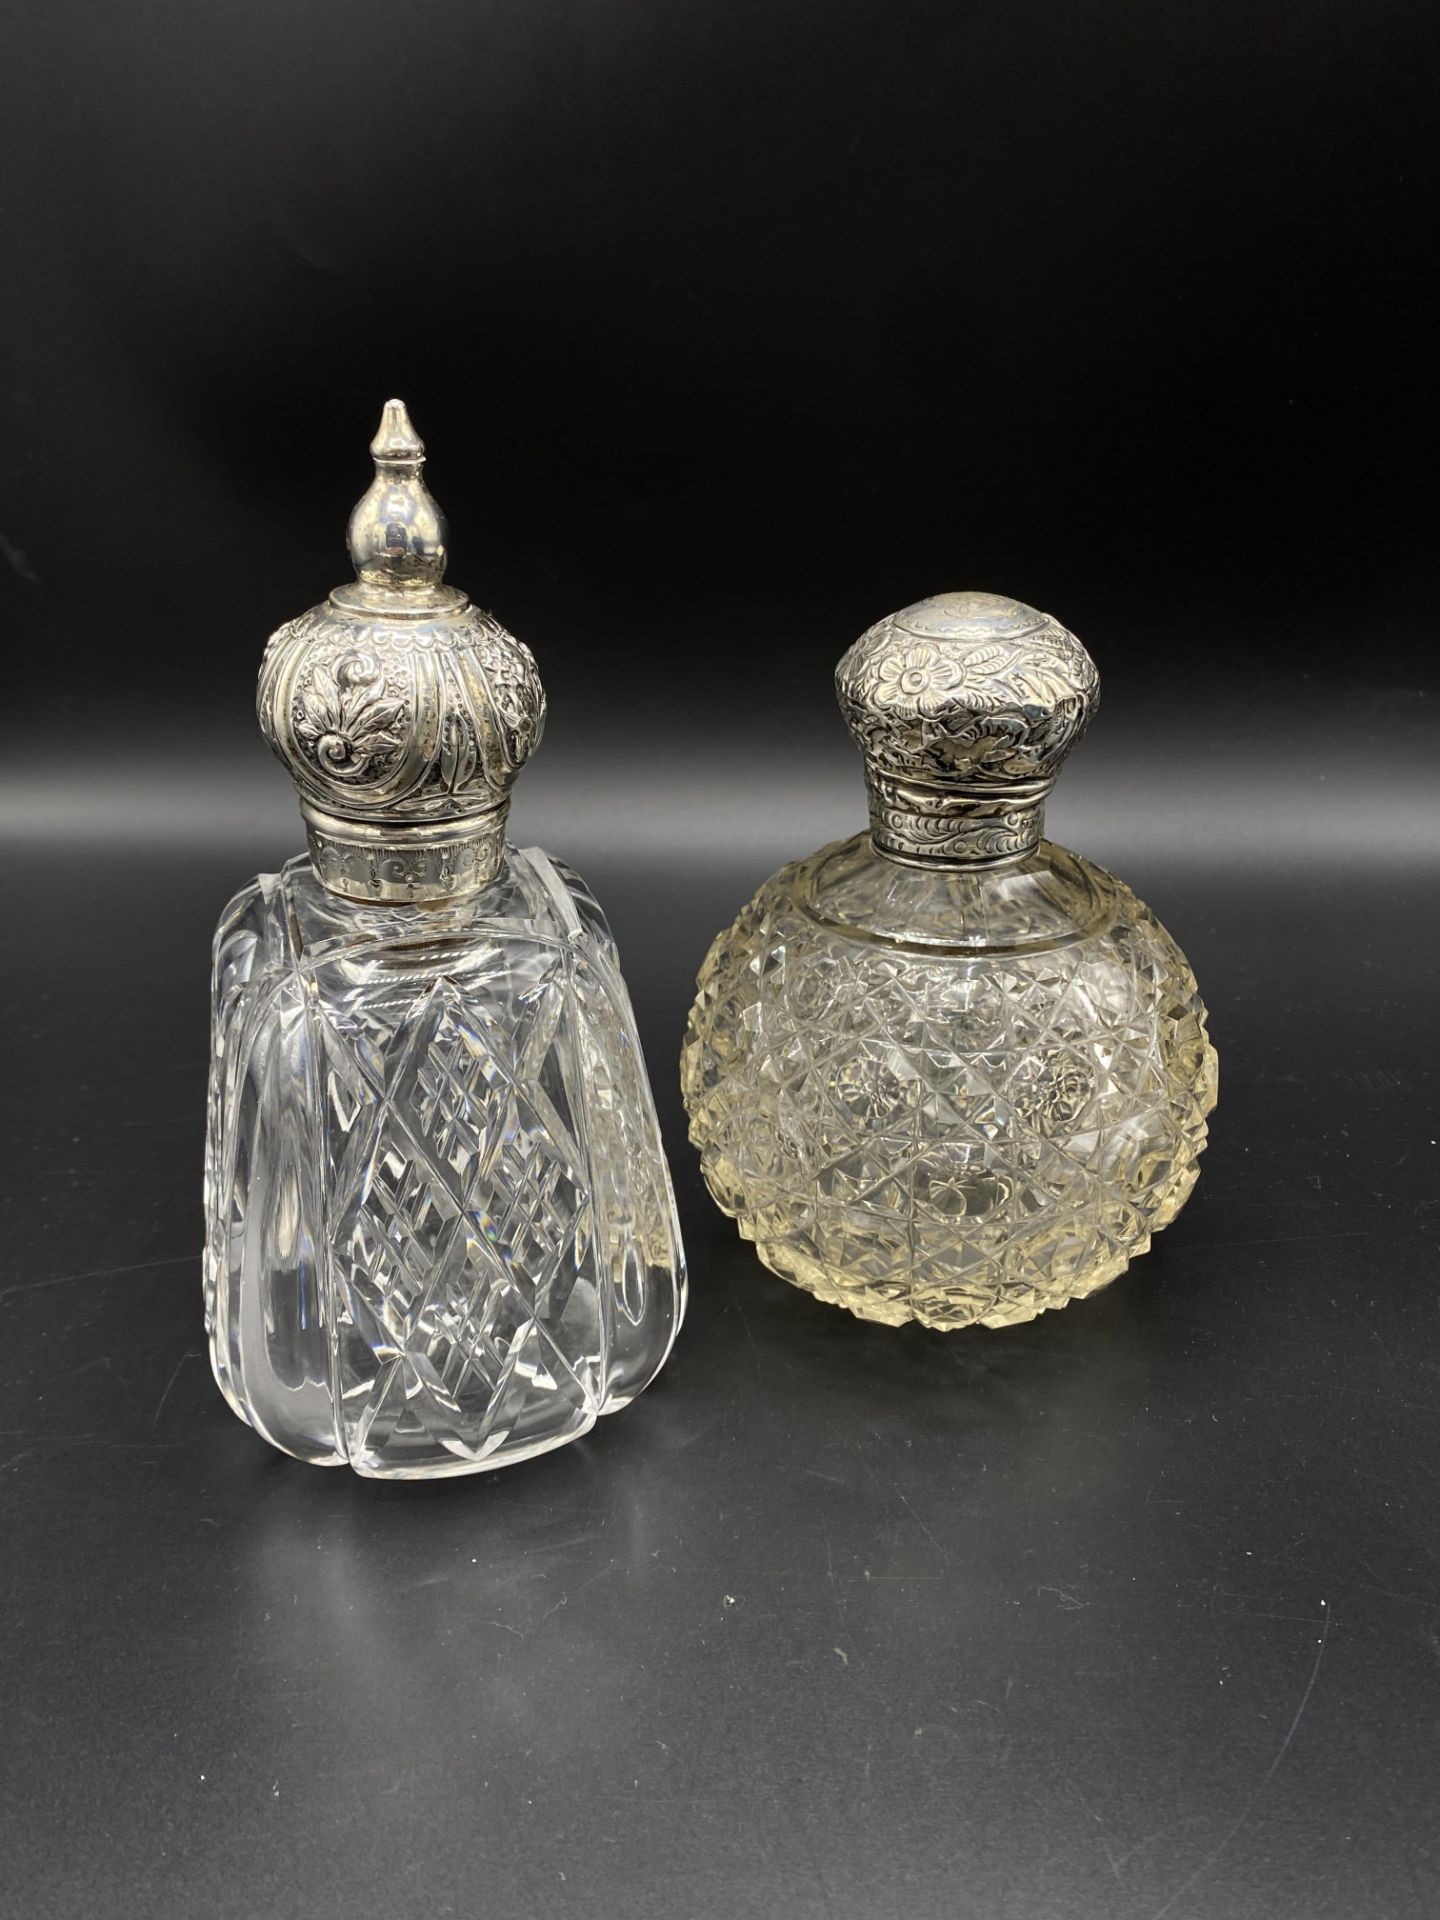 Two cut glass perfume bottles